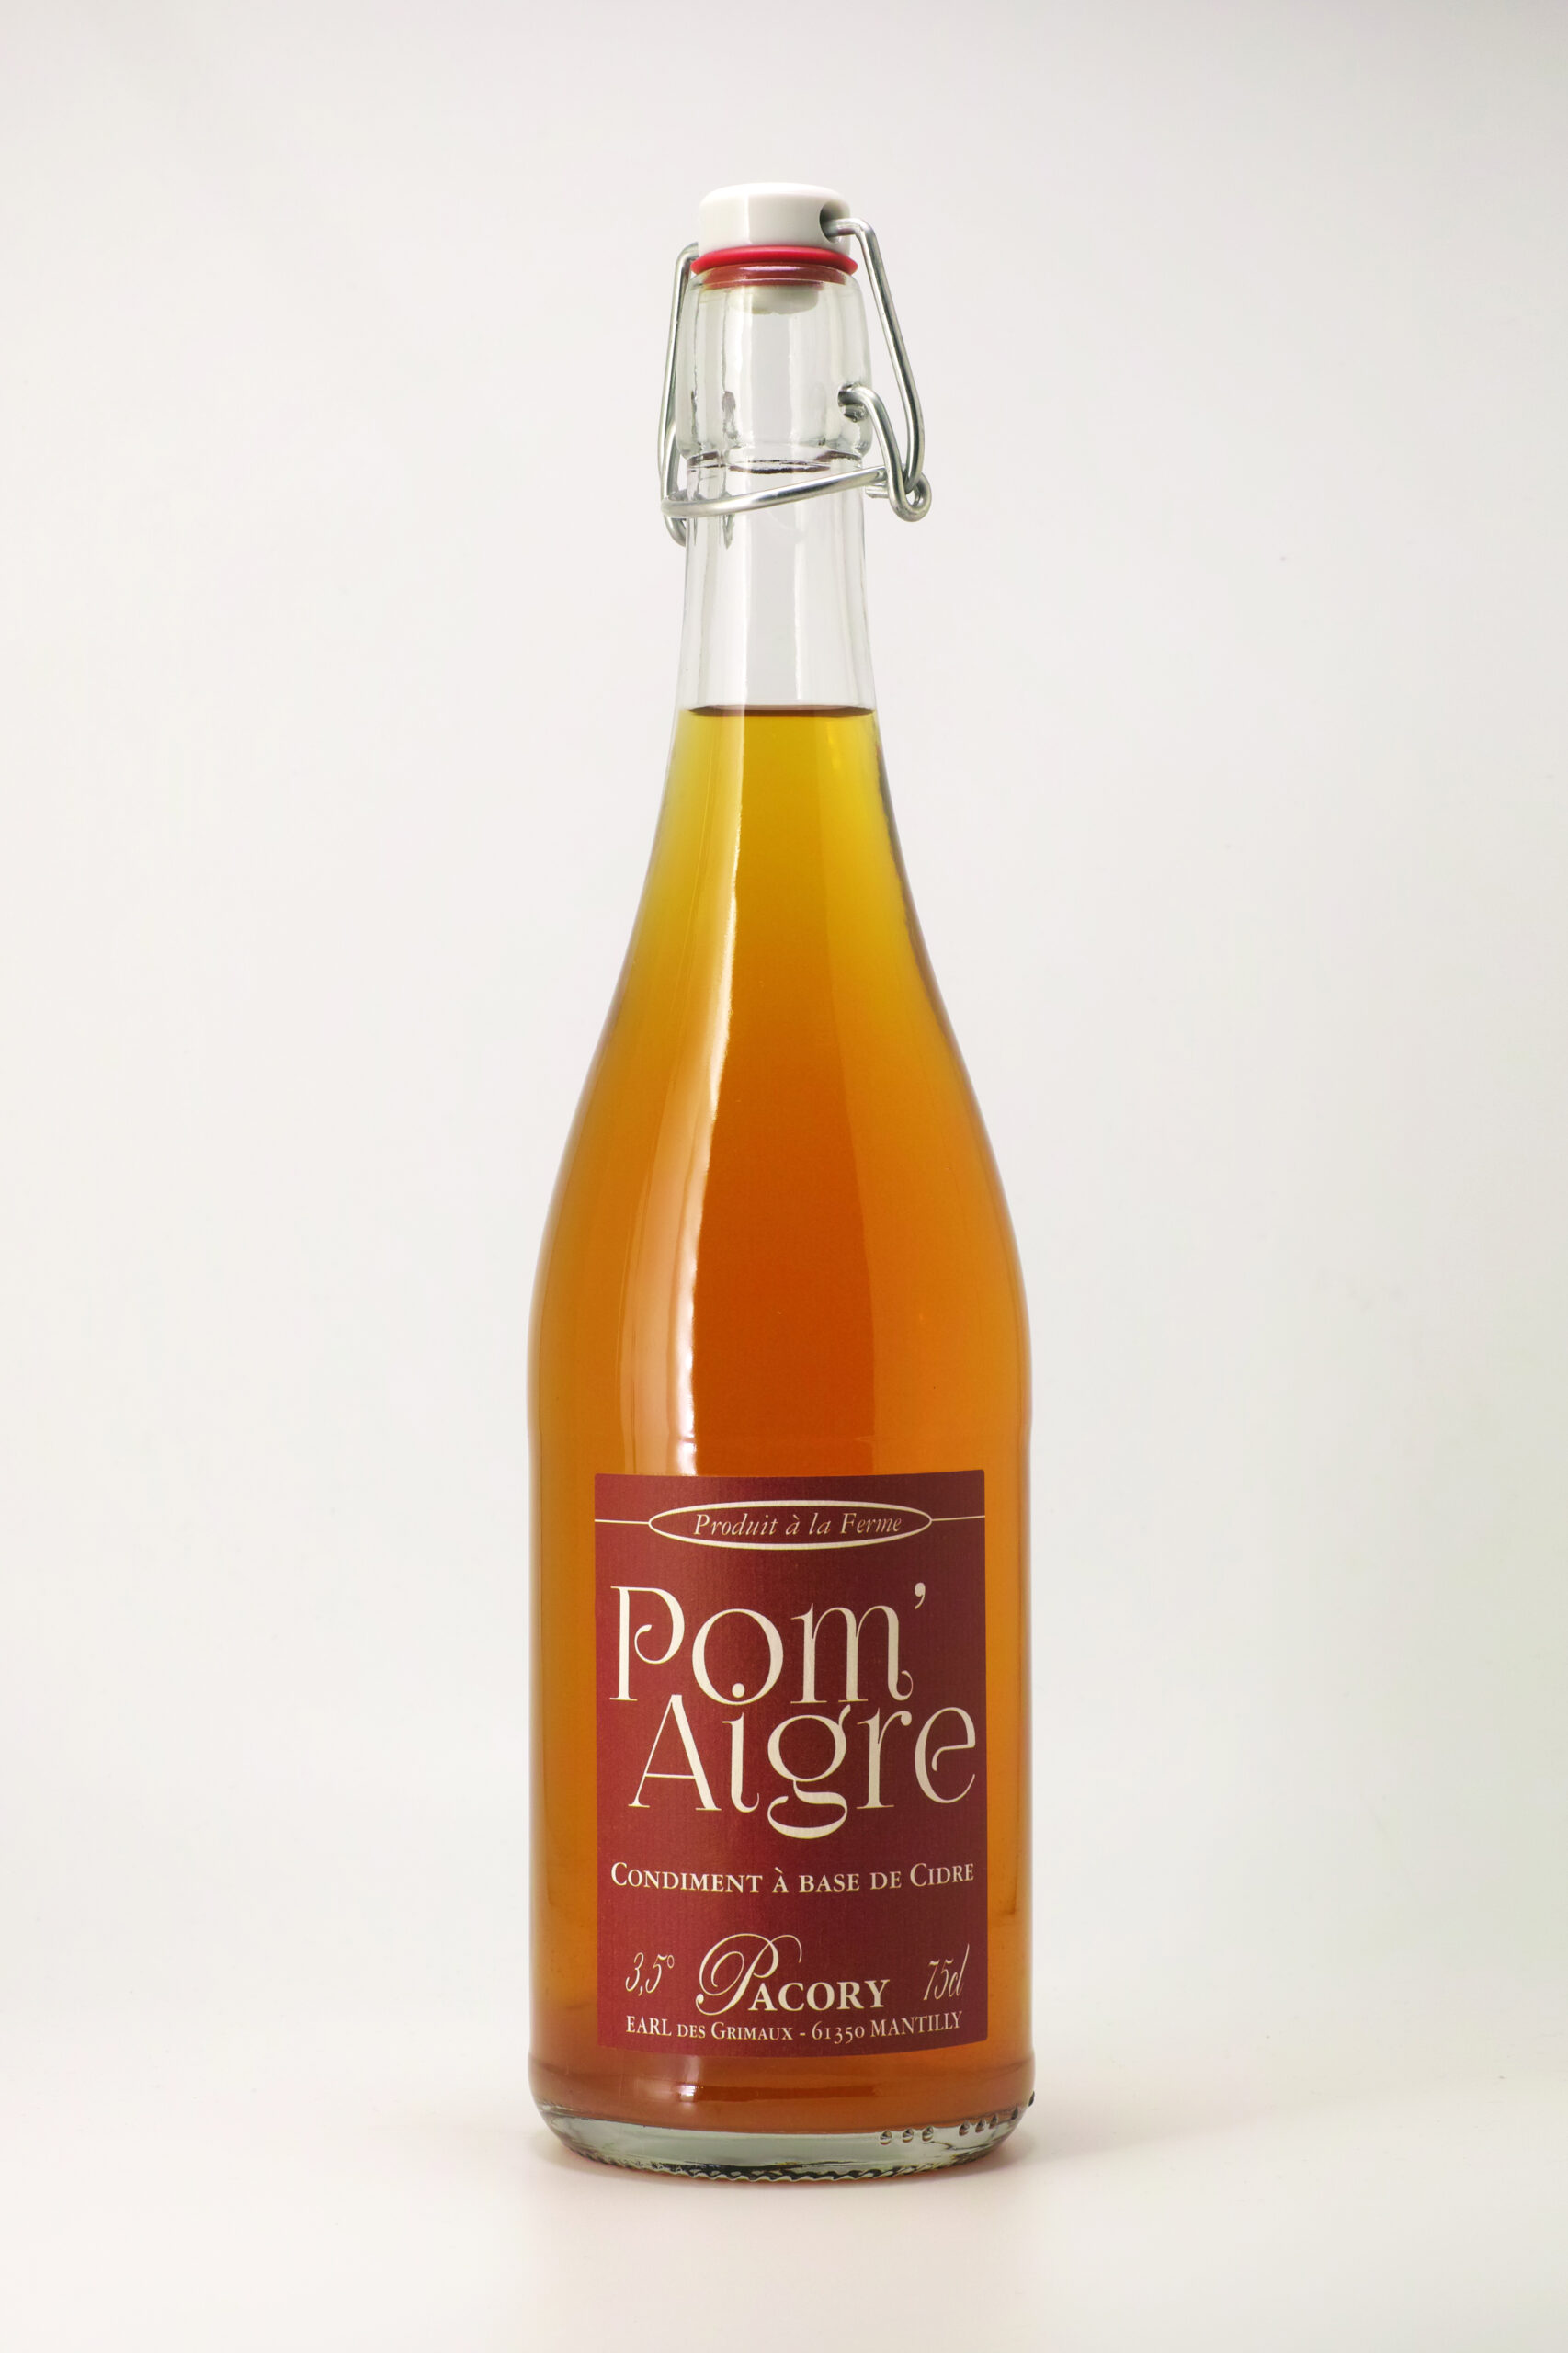 Pom'Aigre - Vinaigre de pomme - Pacory